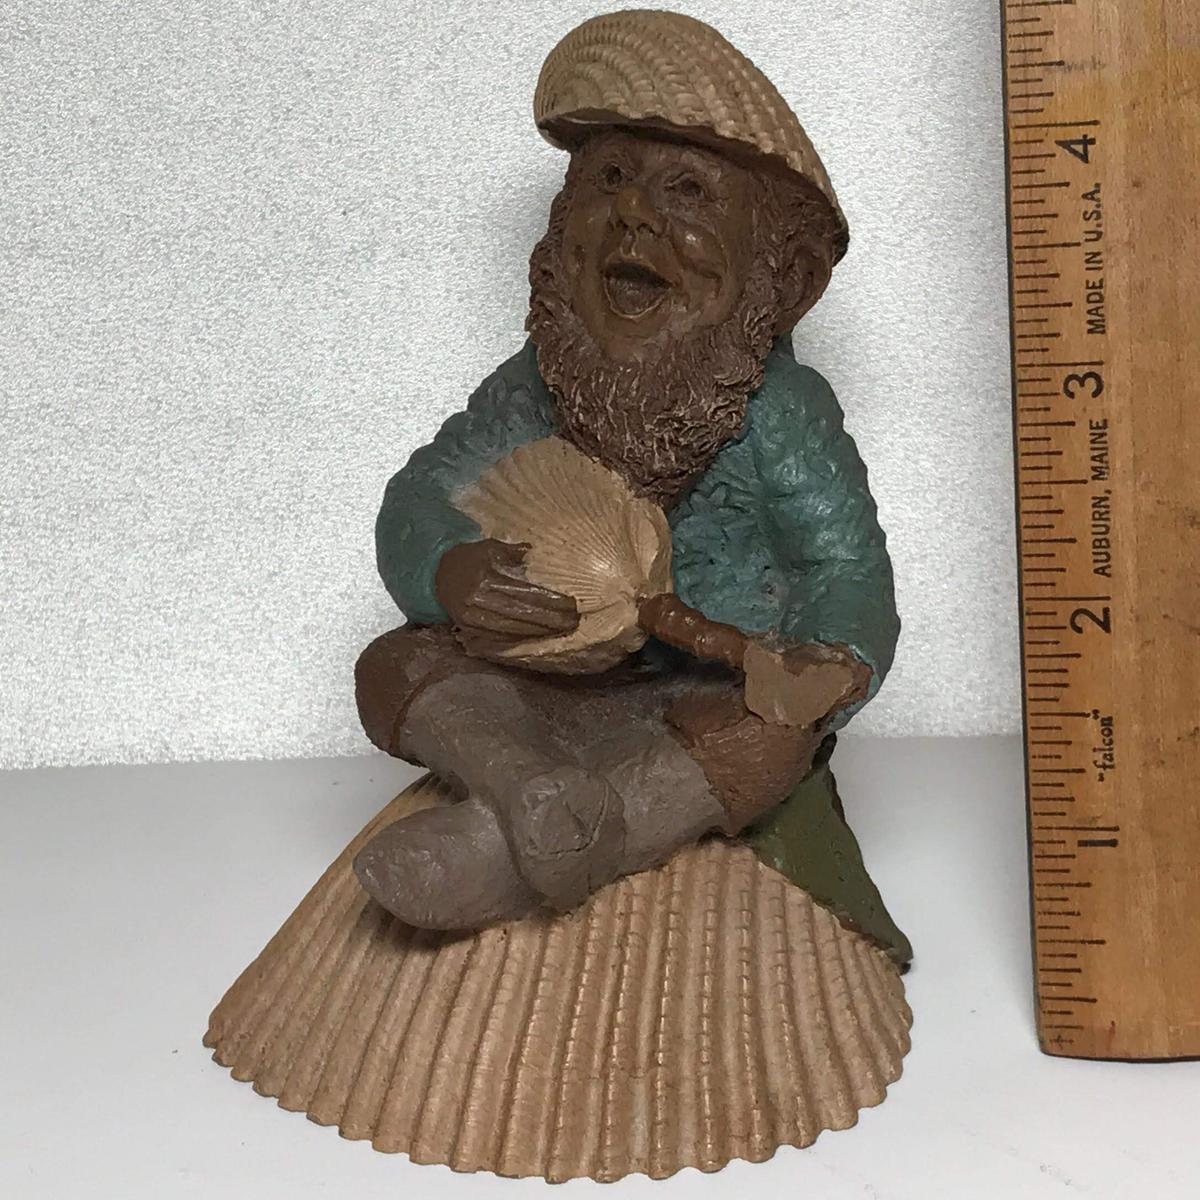 1985 “Jacques” Tom Clark Gnome Figurine